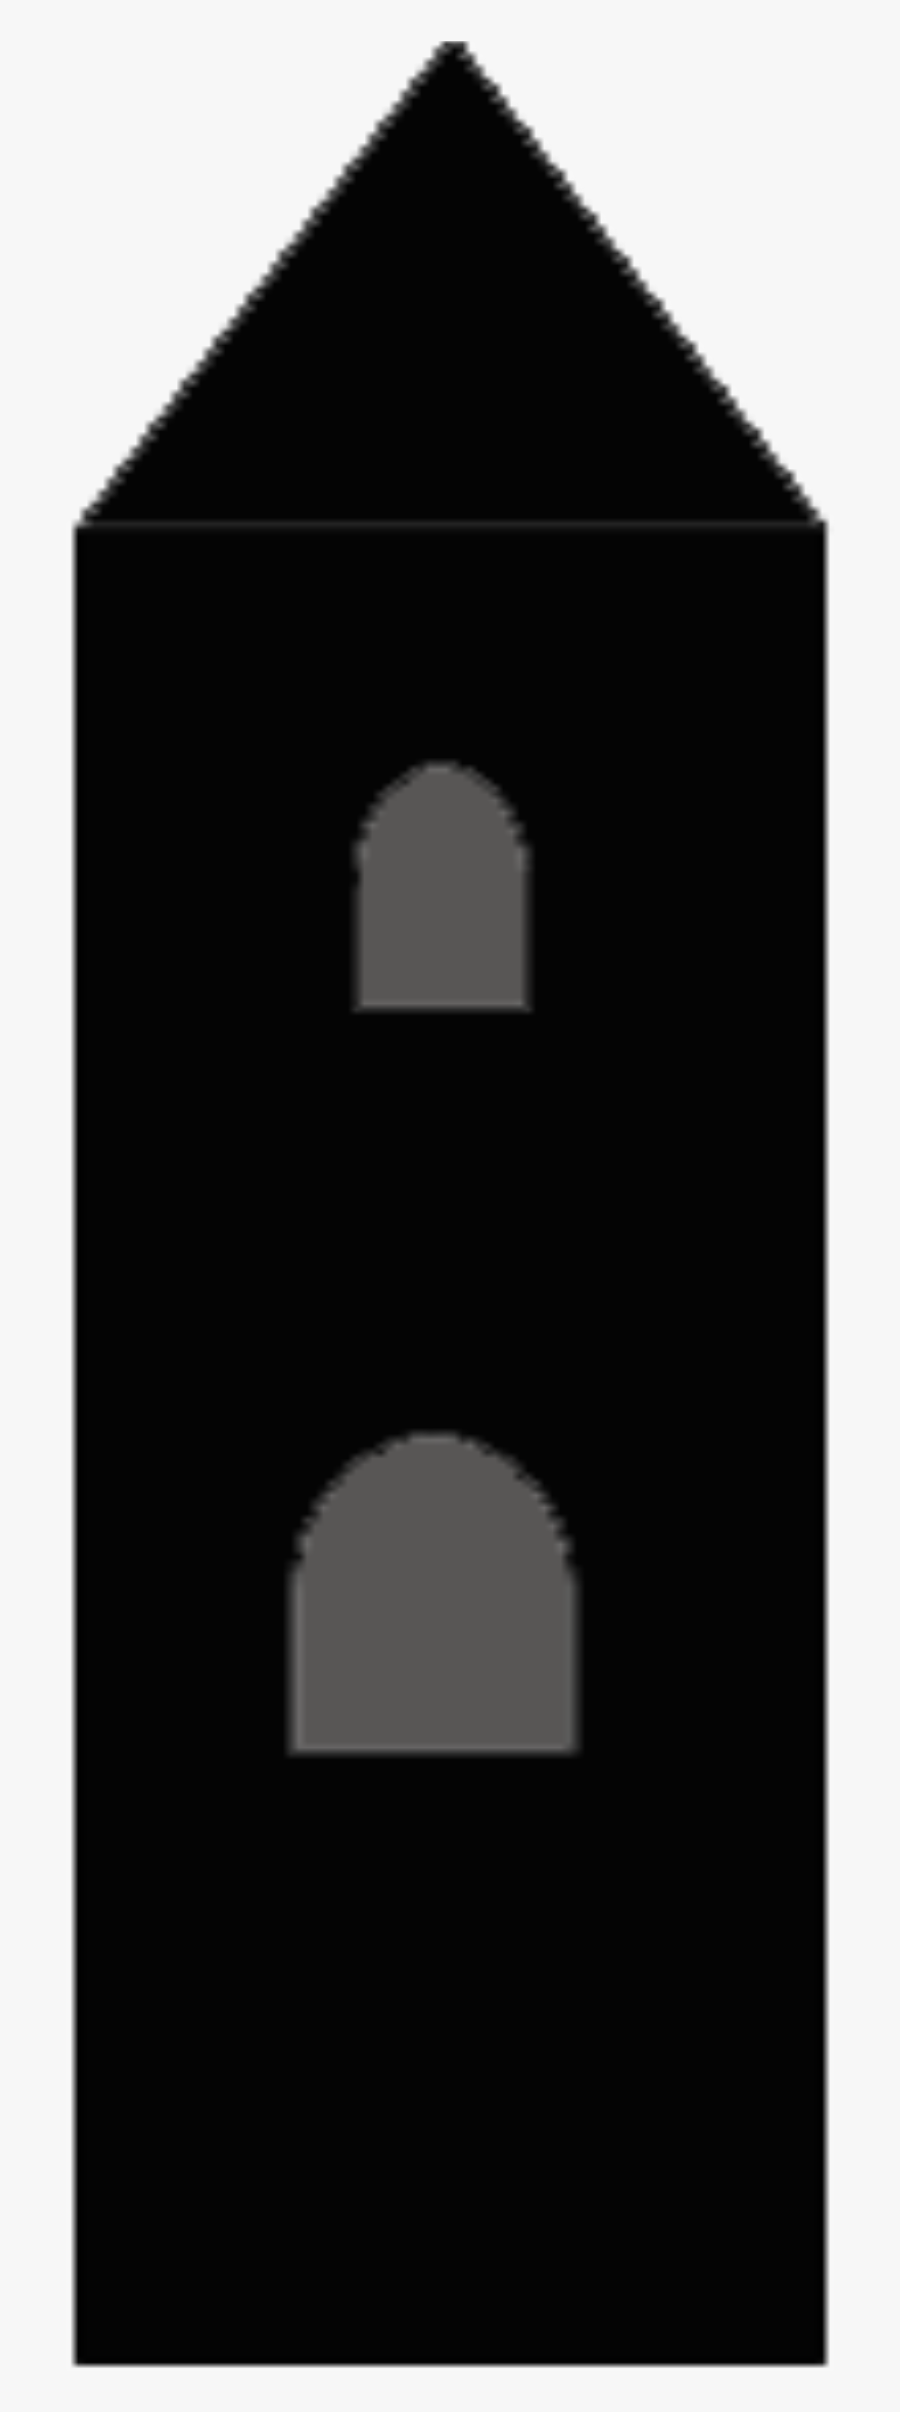 Ireland Round Tower Silhouette Clip Arts - Irish Round Tower Clipart, Transparent Clipart